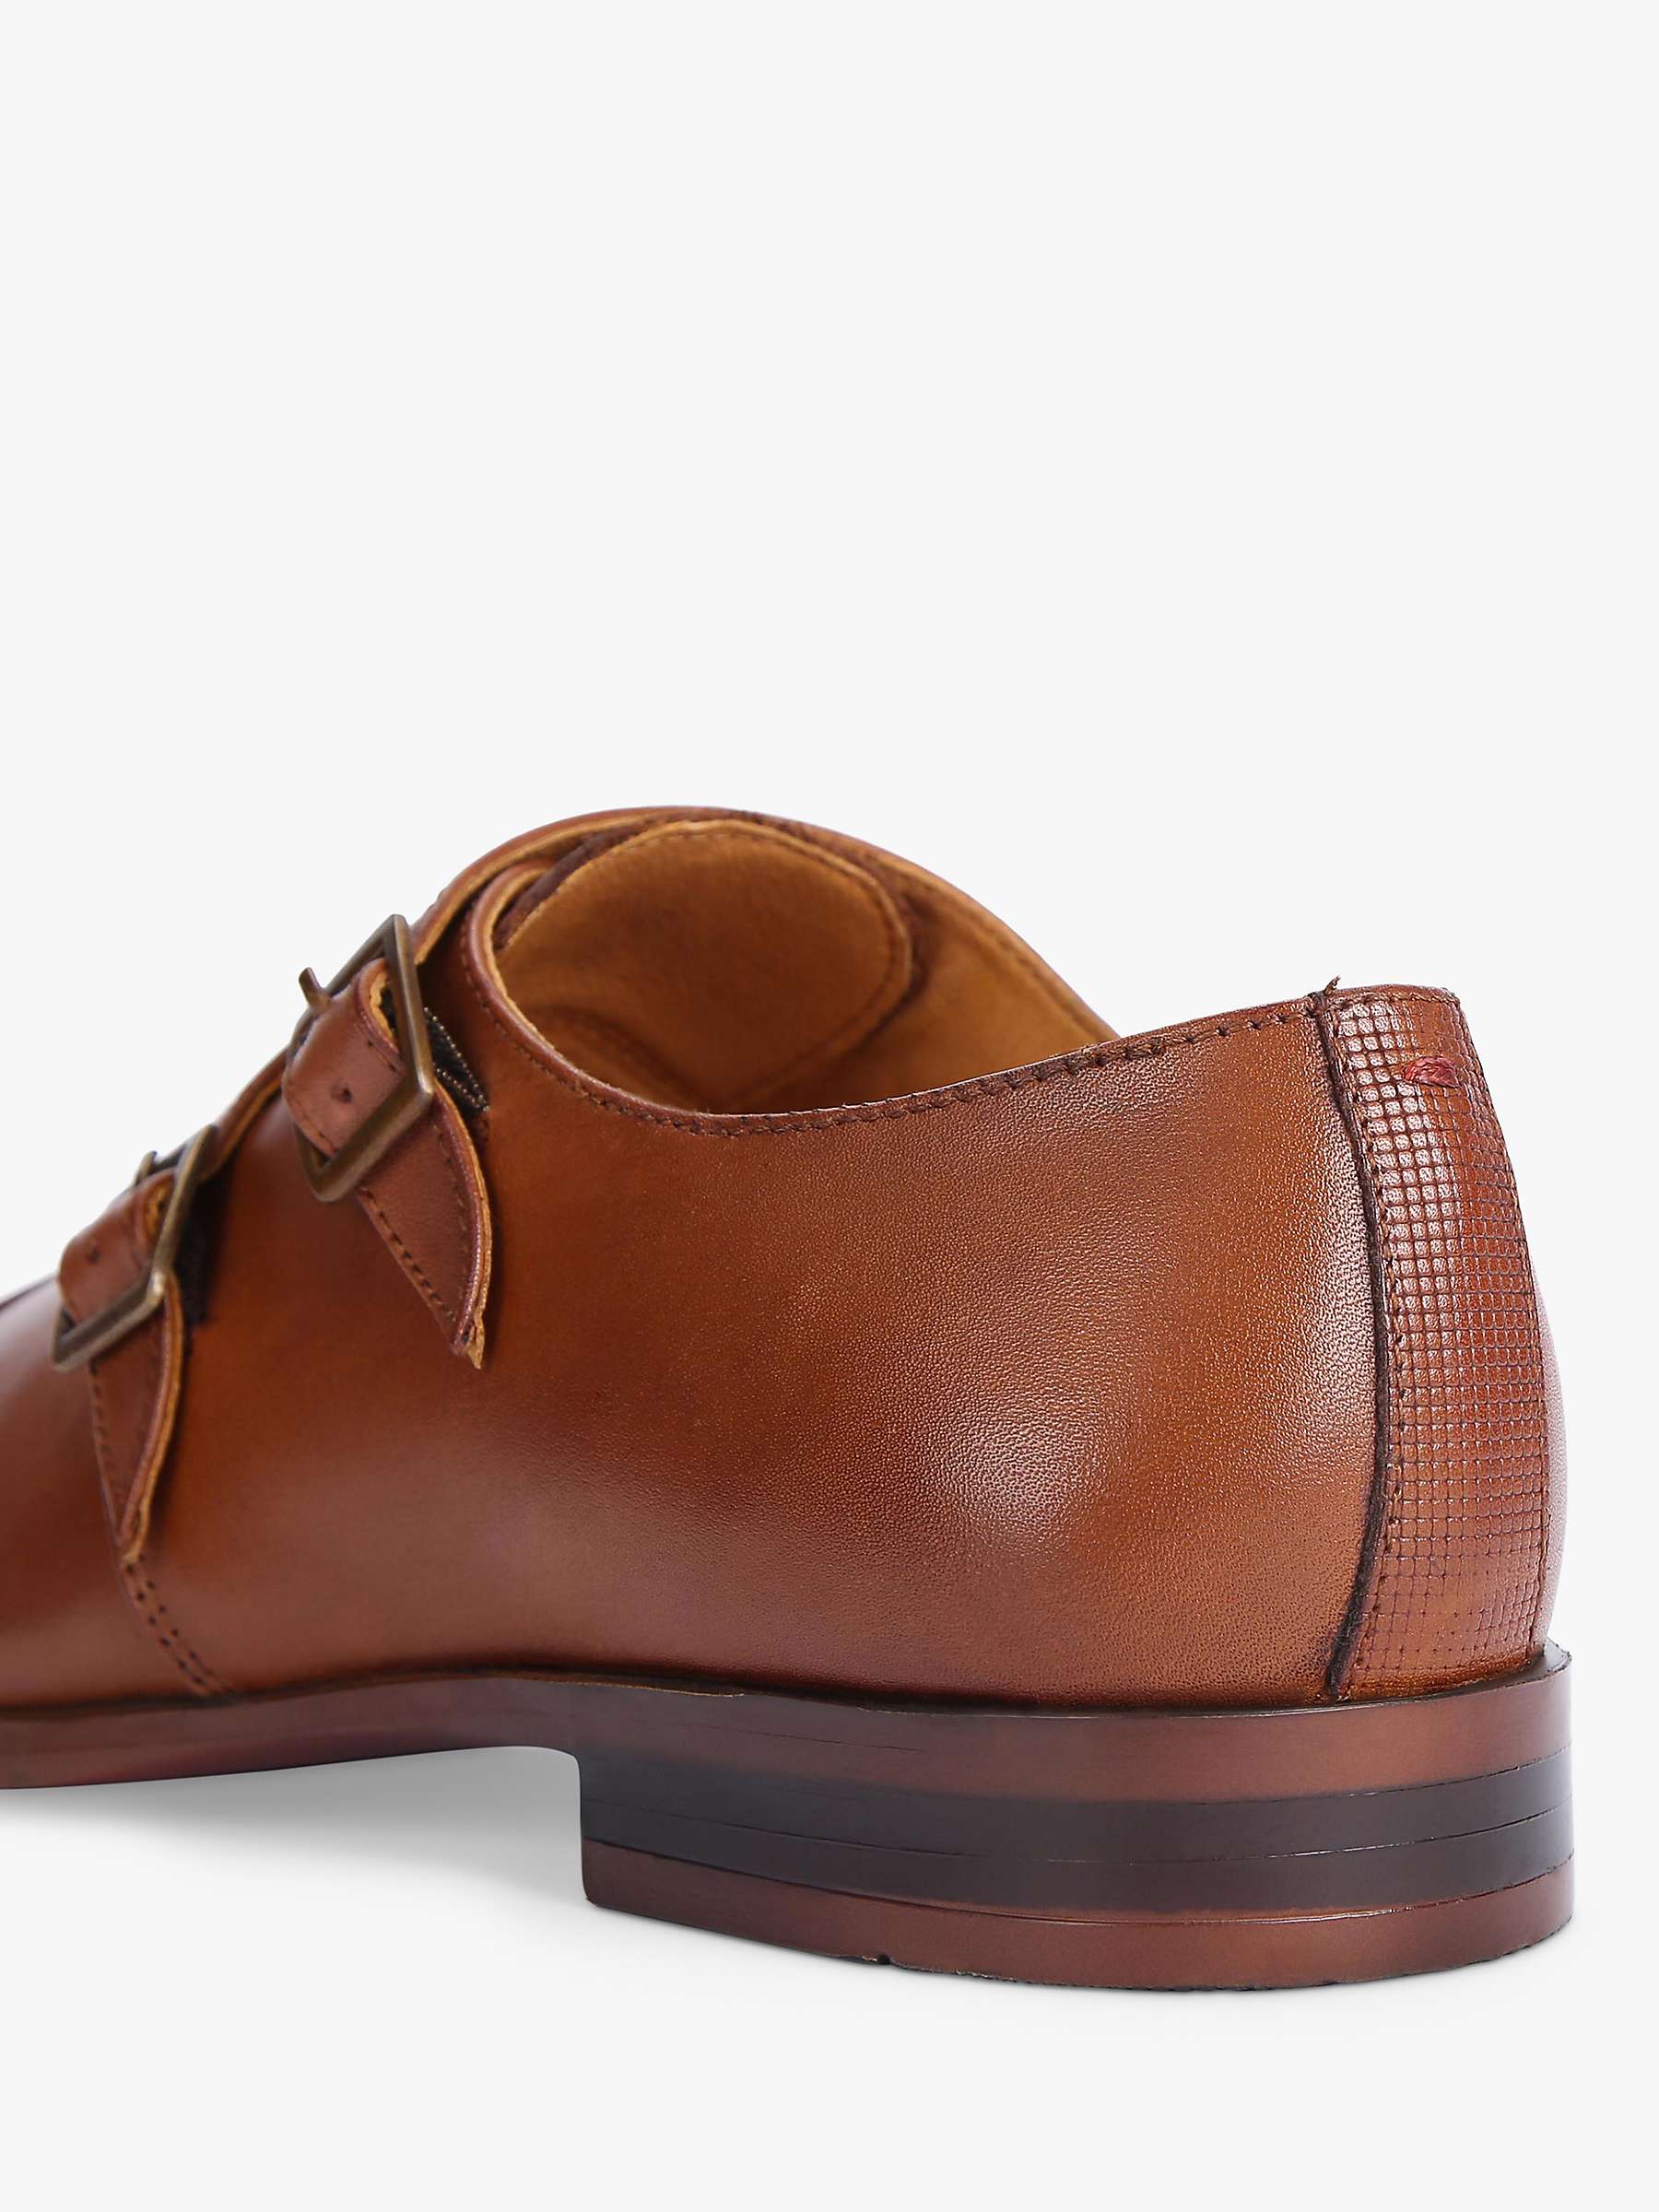 Buy KG Kurt Geiger Collins Monk Shoes Online at johnlewis.com